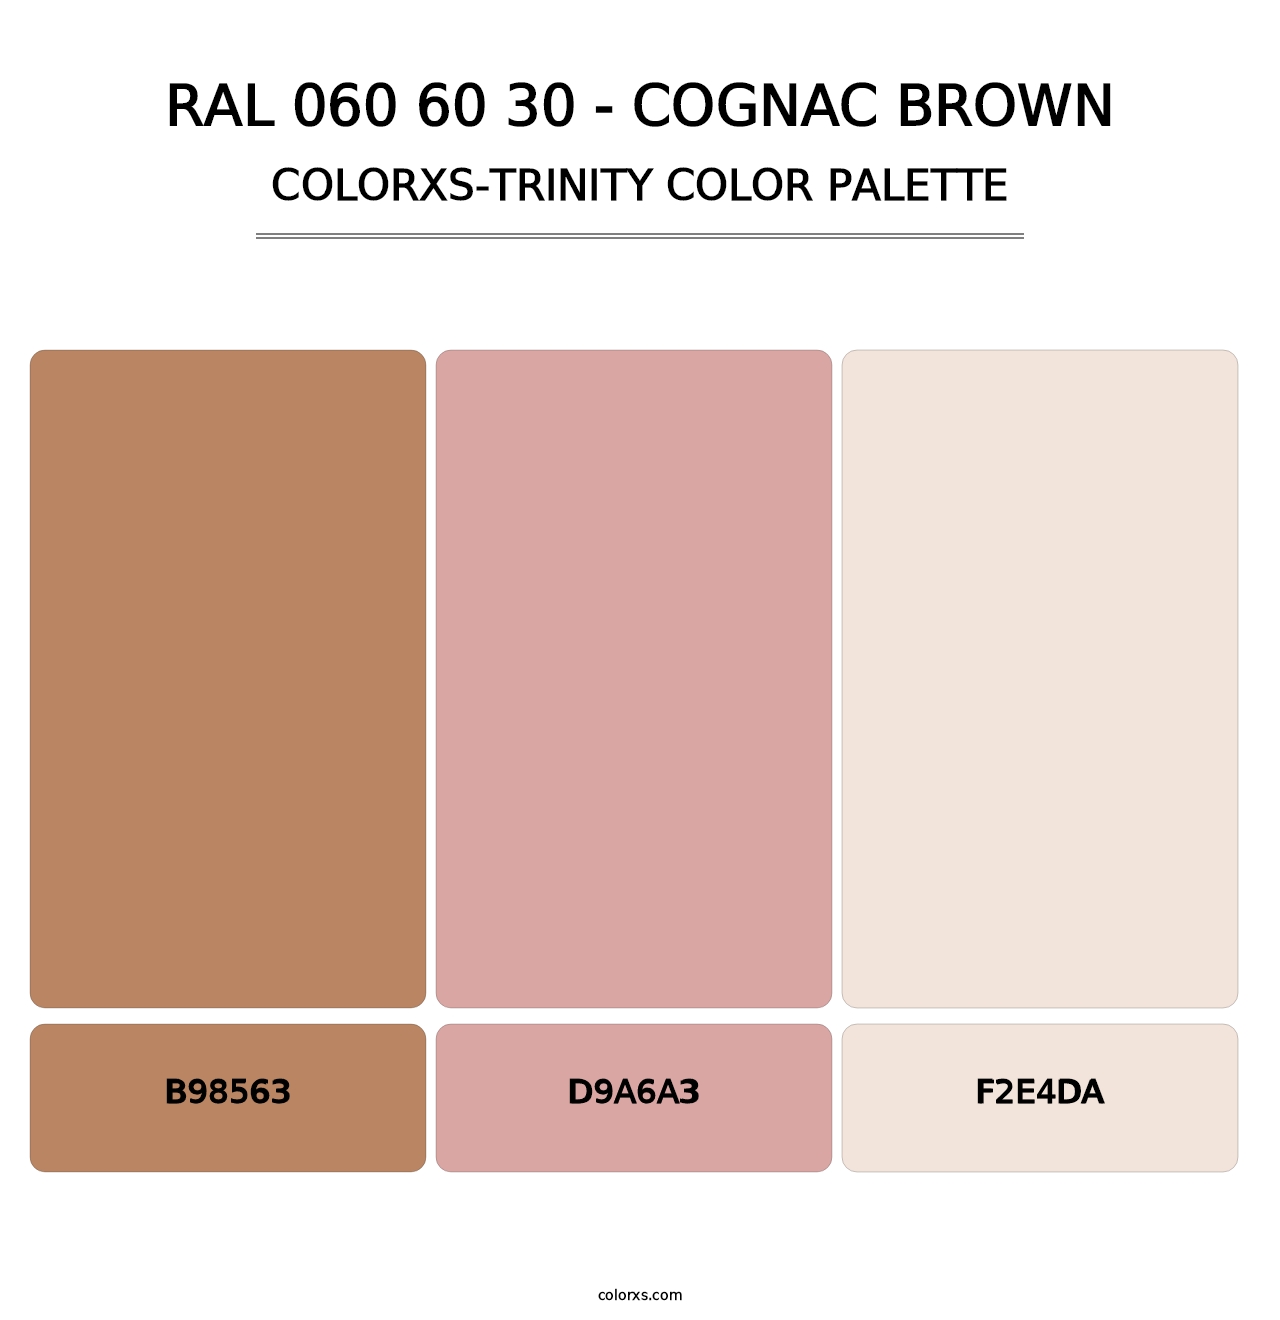 RAL 060 60 30 - Cognac Brown - Colorxs Trinity Palette